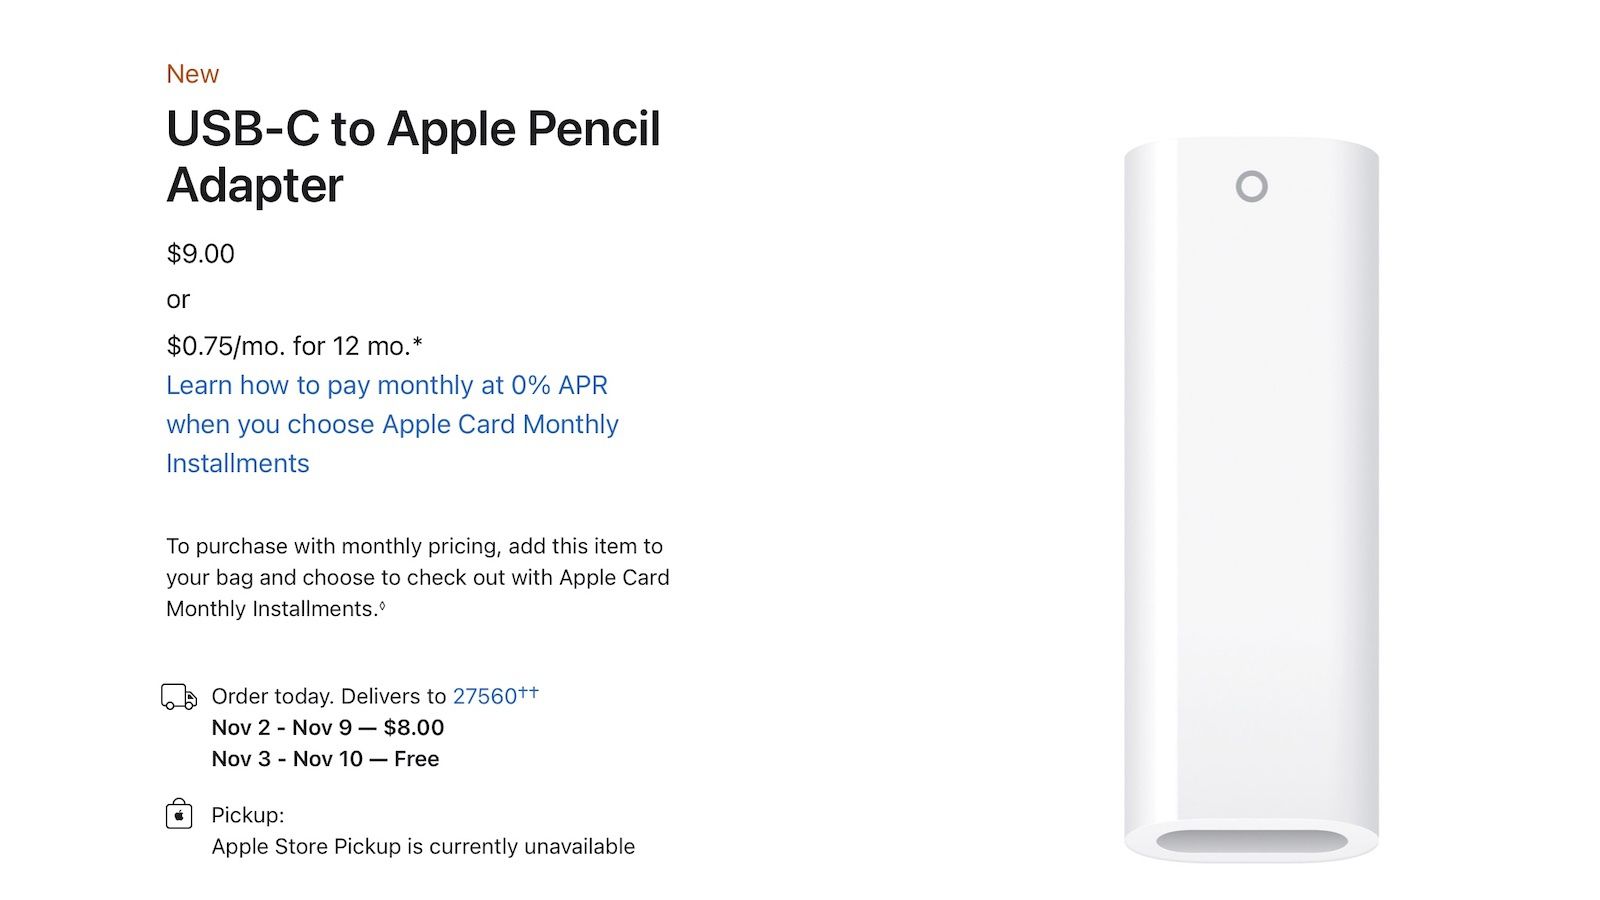 https://images.macrumors.com/t/by7yzPk4vBXysDMD-OvJsU1yTTY=/1600x/article-new/2022/10/usb-c-apple-pencil-adapter.jpg